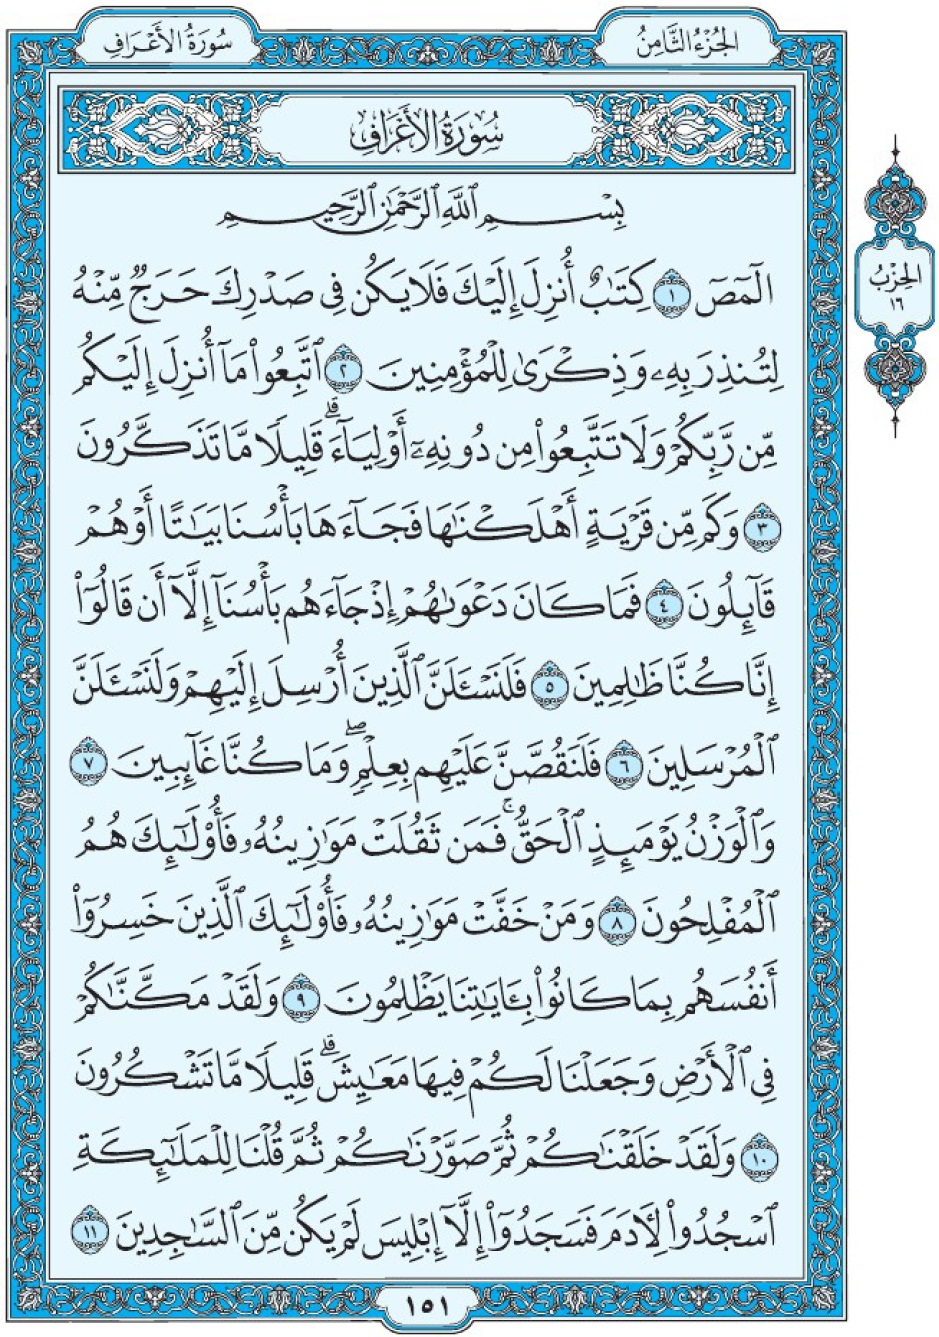 Коран Мединский мусхаф страница 151, сура 7 Аль-А‘раф سورة ٧ الأعراف 